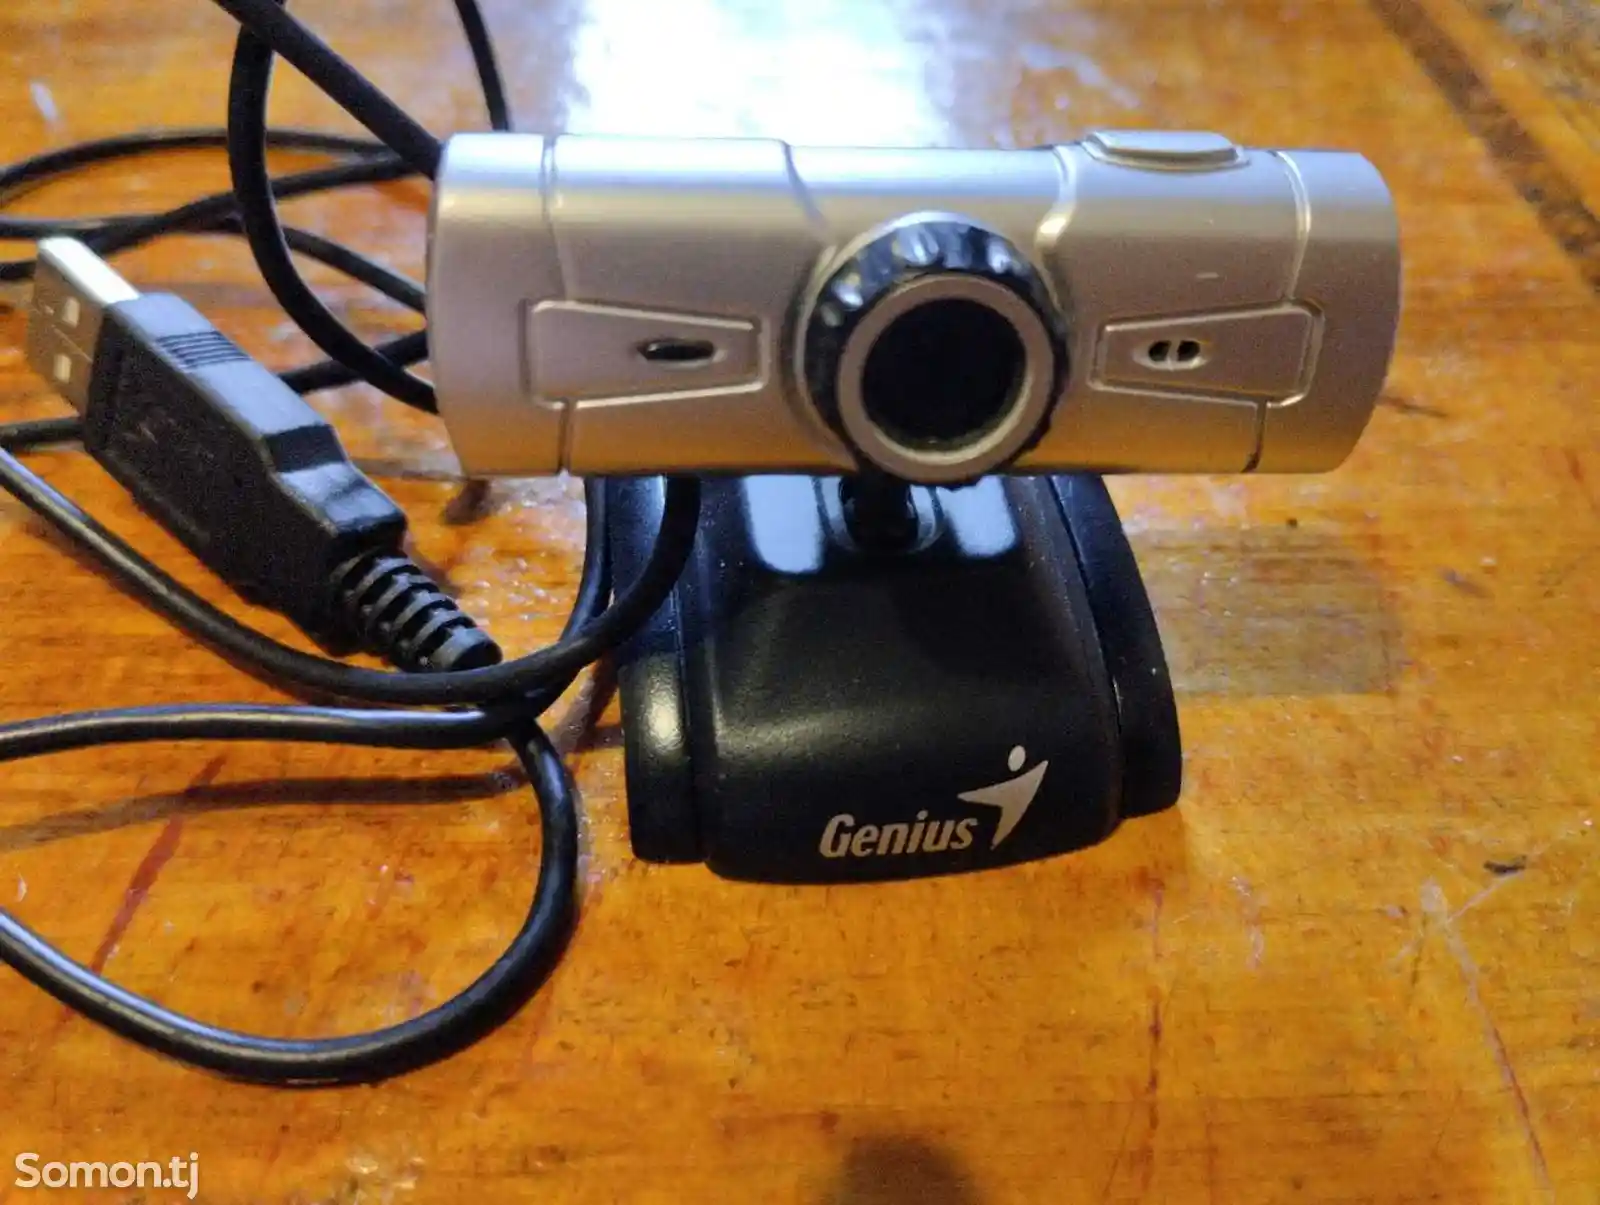 Web - камера genius eye 312